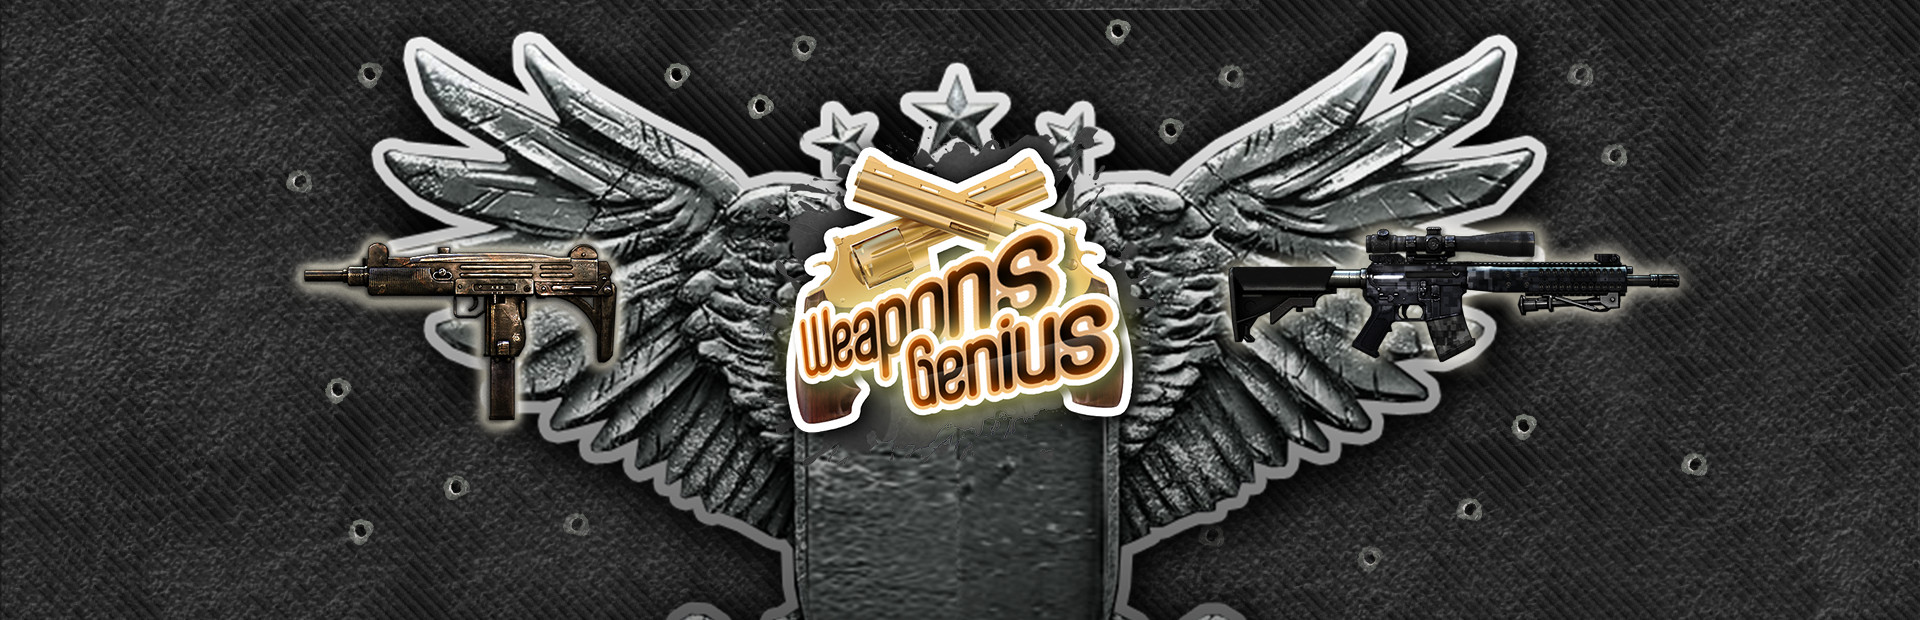 Weapons Genius cover image